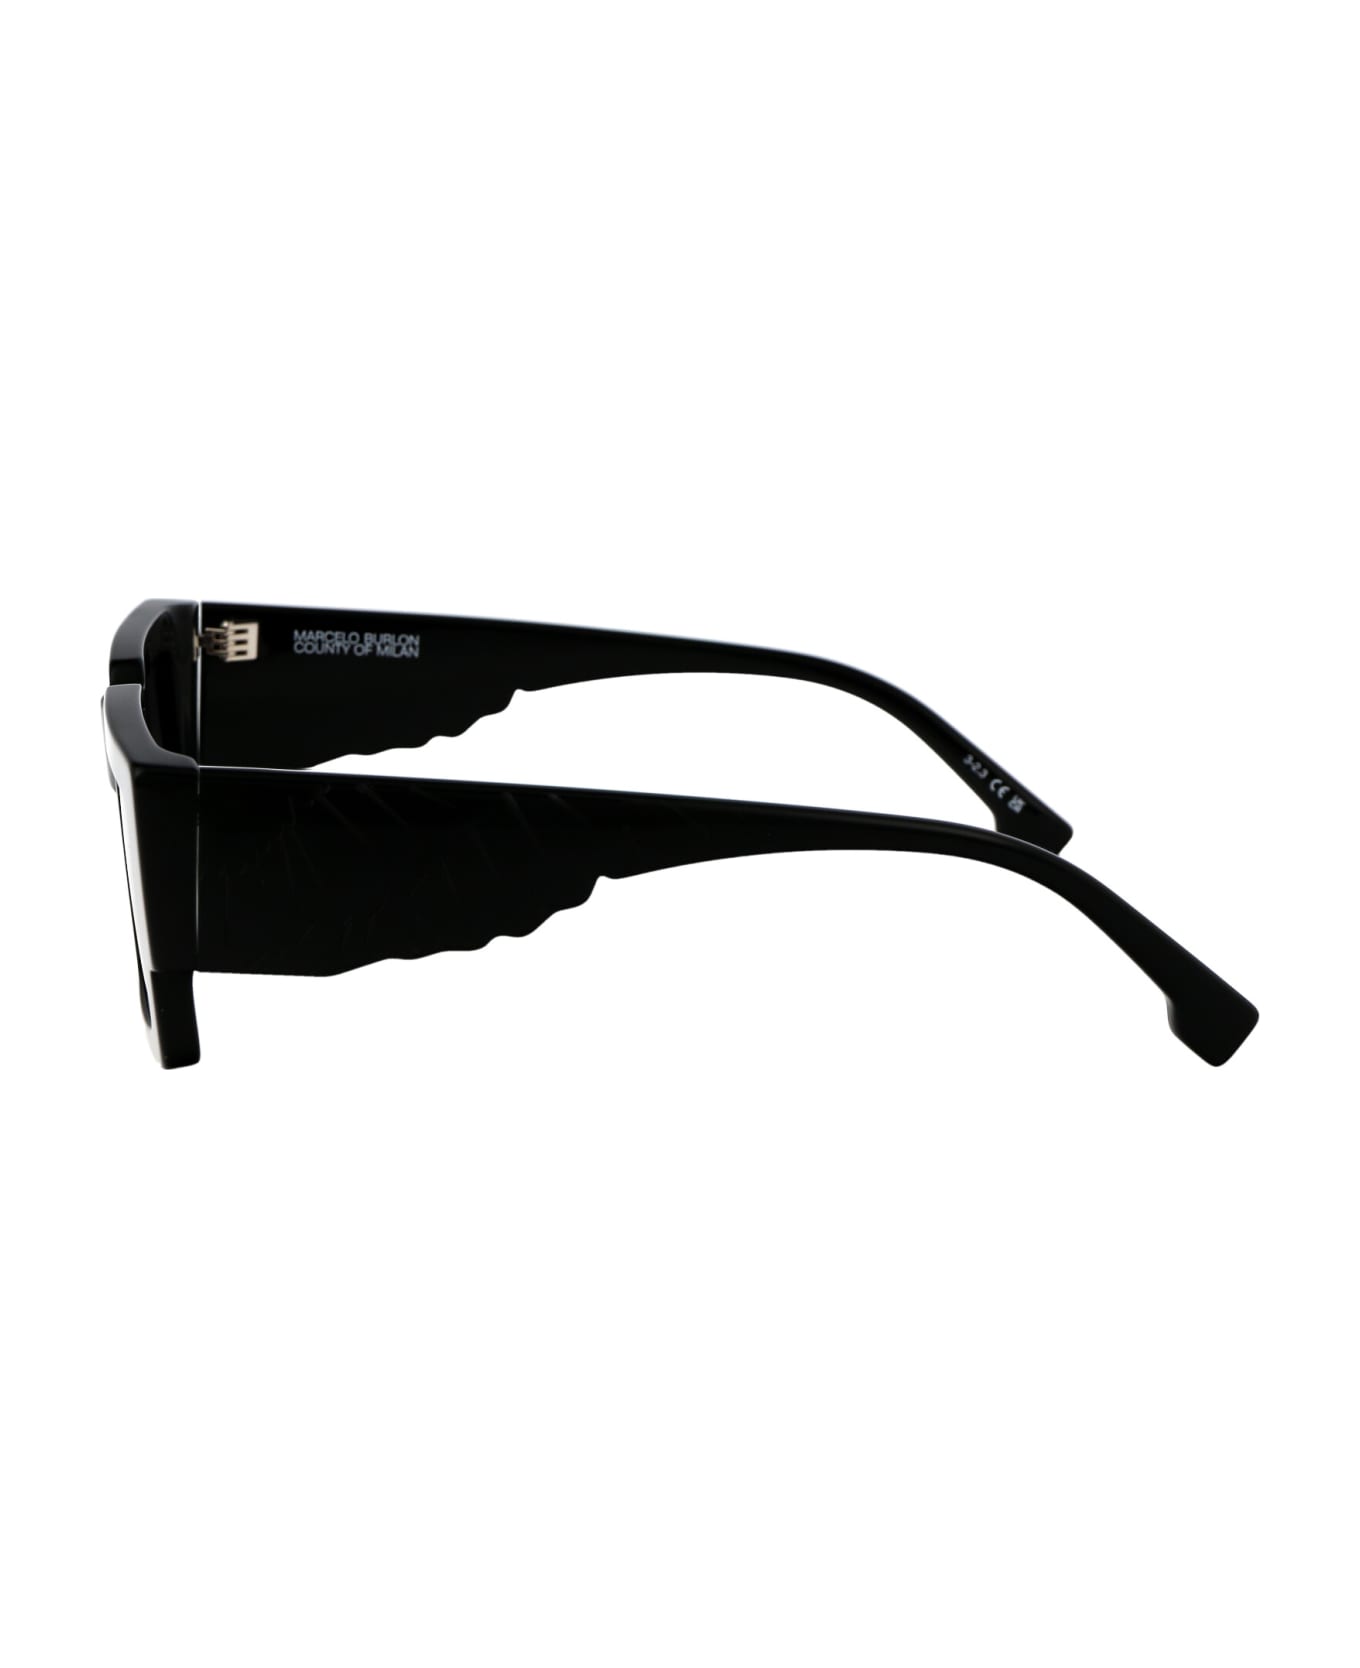 Marcelo Burlon Tineo Sunglasses - 1007 BLACK